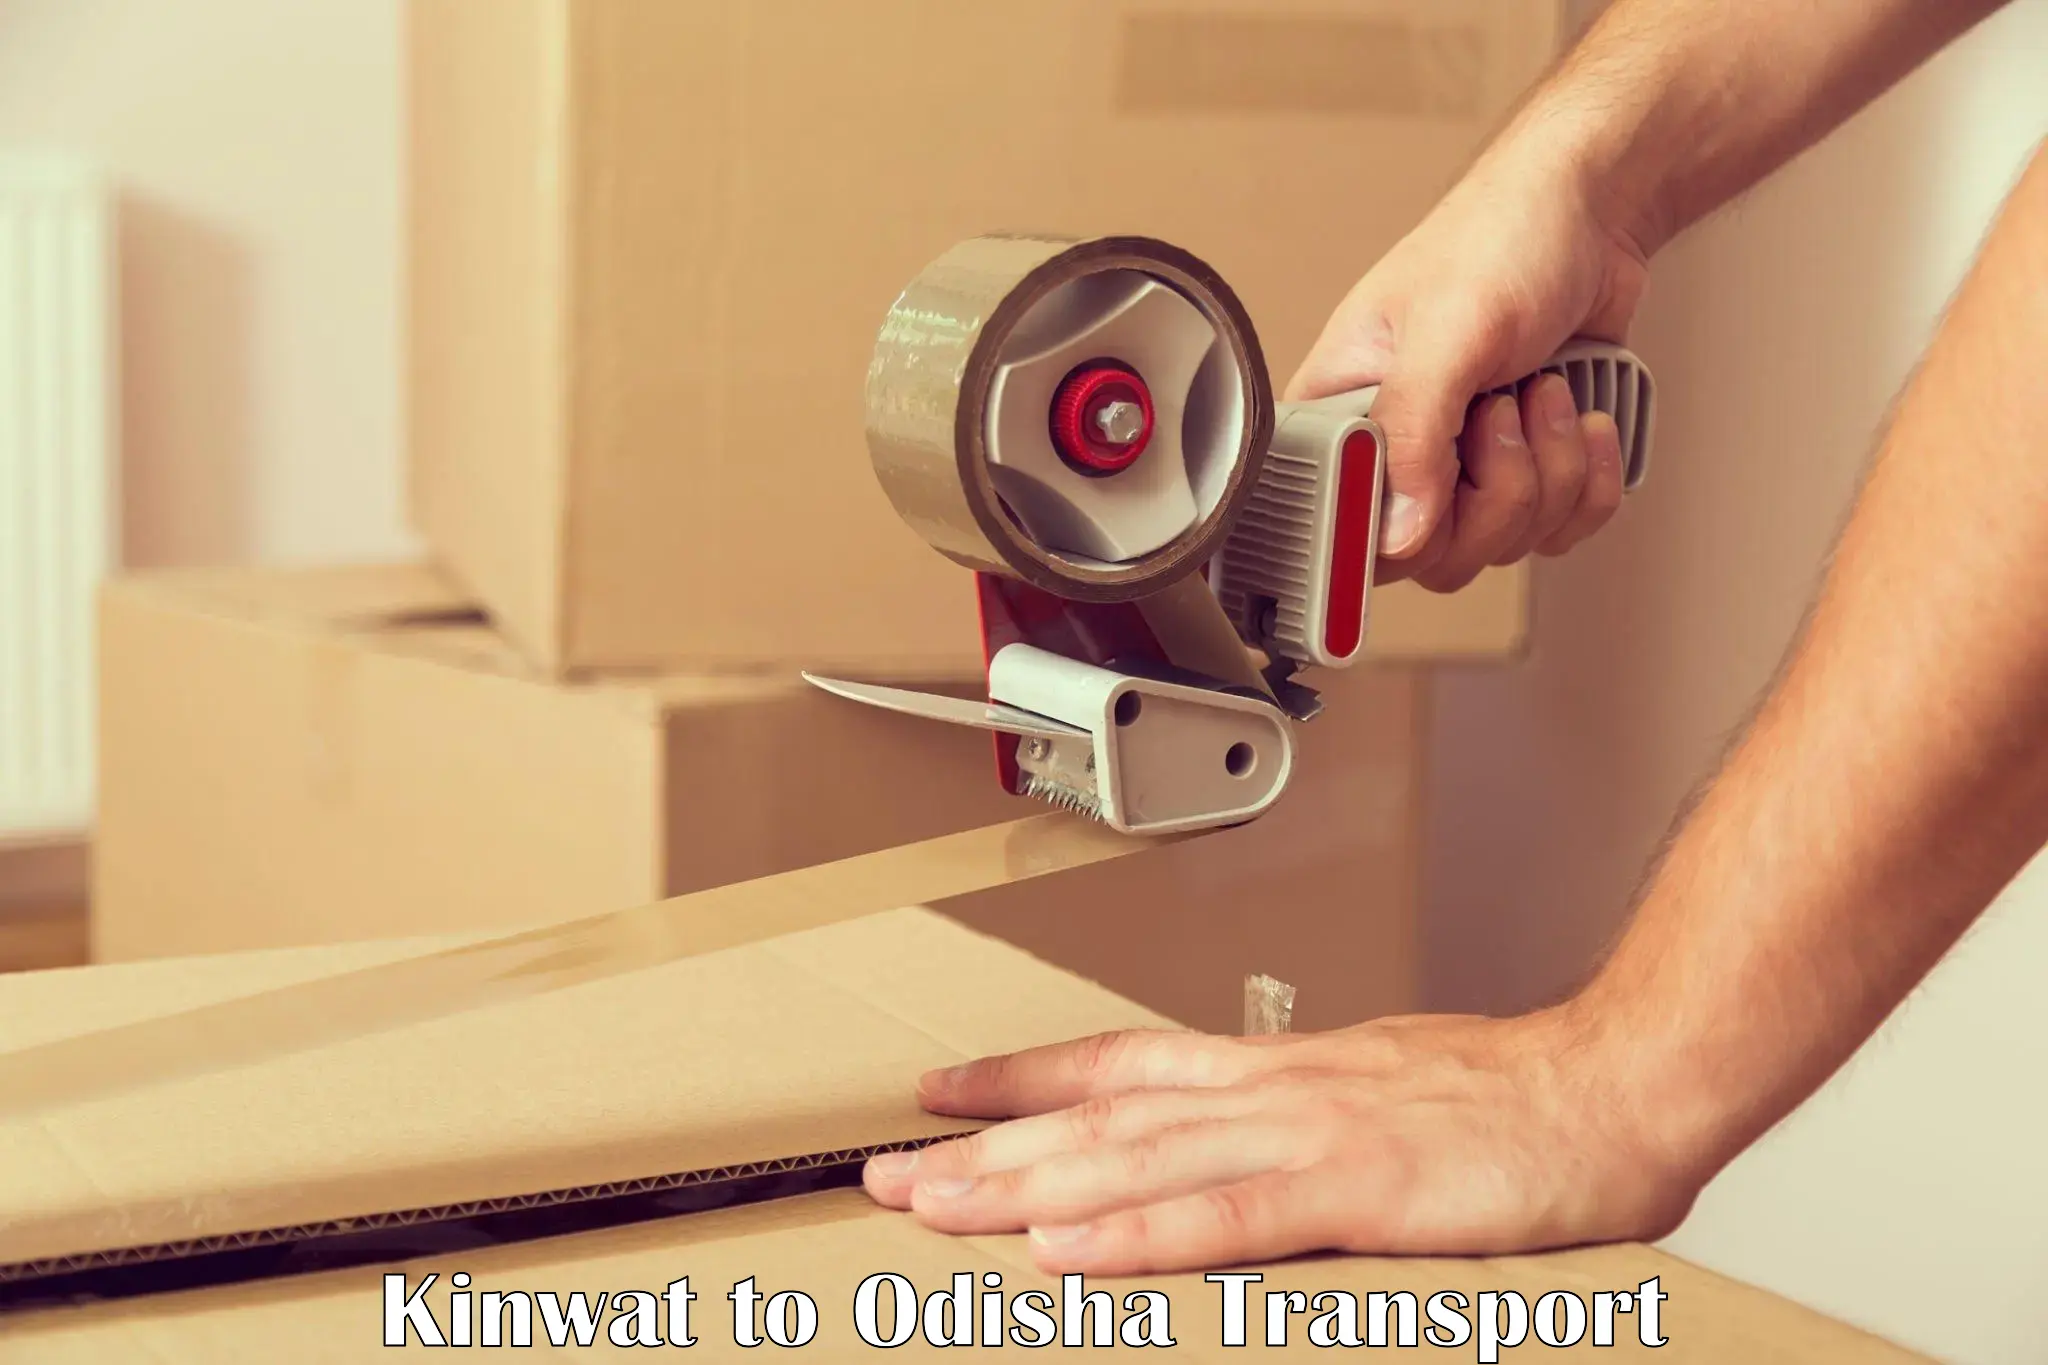 Furniture transport service Kinwat to Kupari